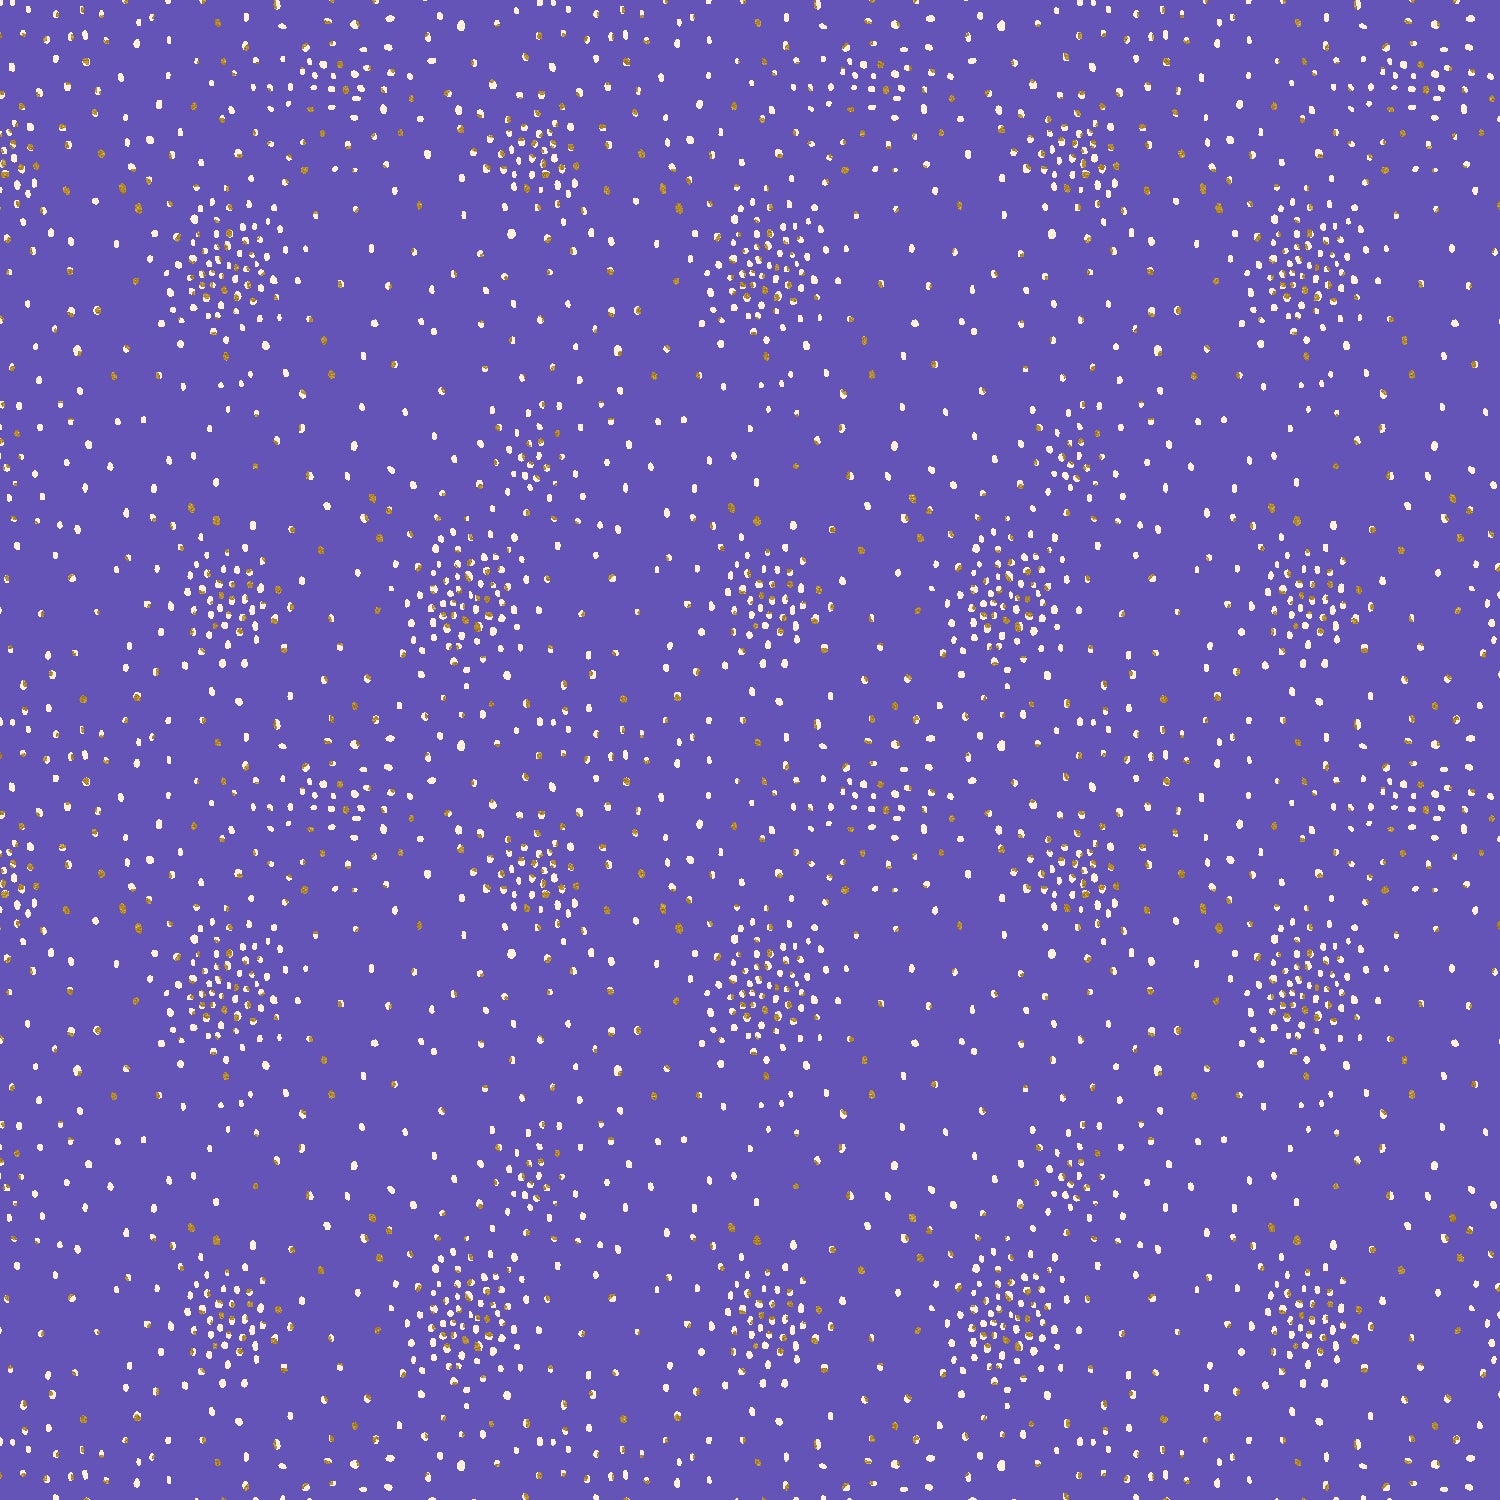 Clusters Quilt Fabric by Cotton+Steel - Dark Lilac Metallic (Purple) - CS107-DL7M